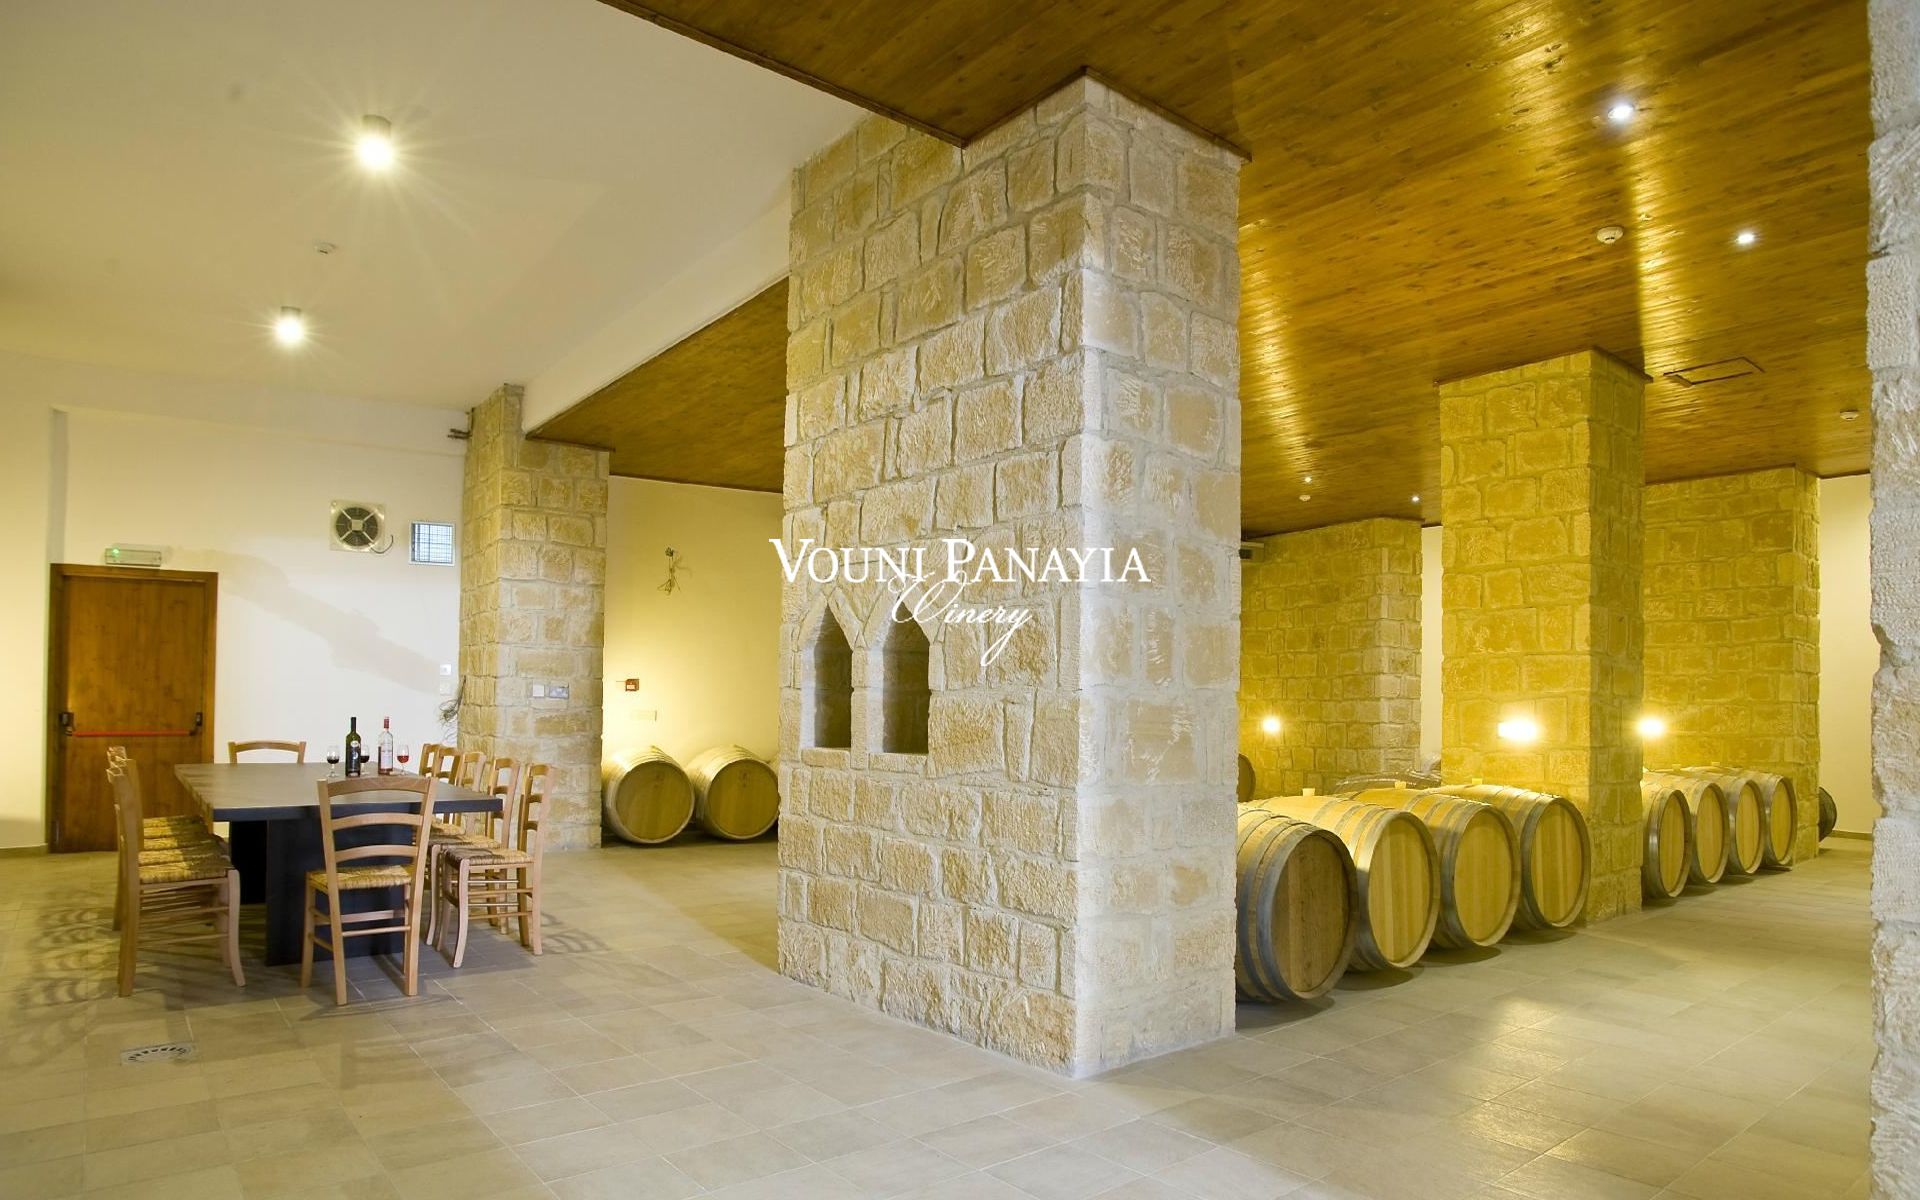 Vouni Panayia Winery in Cyprus